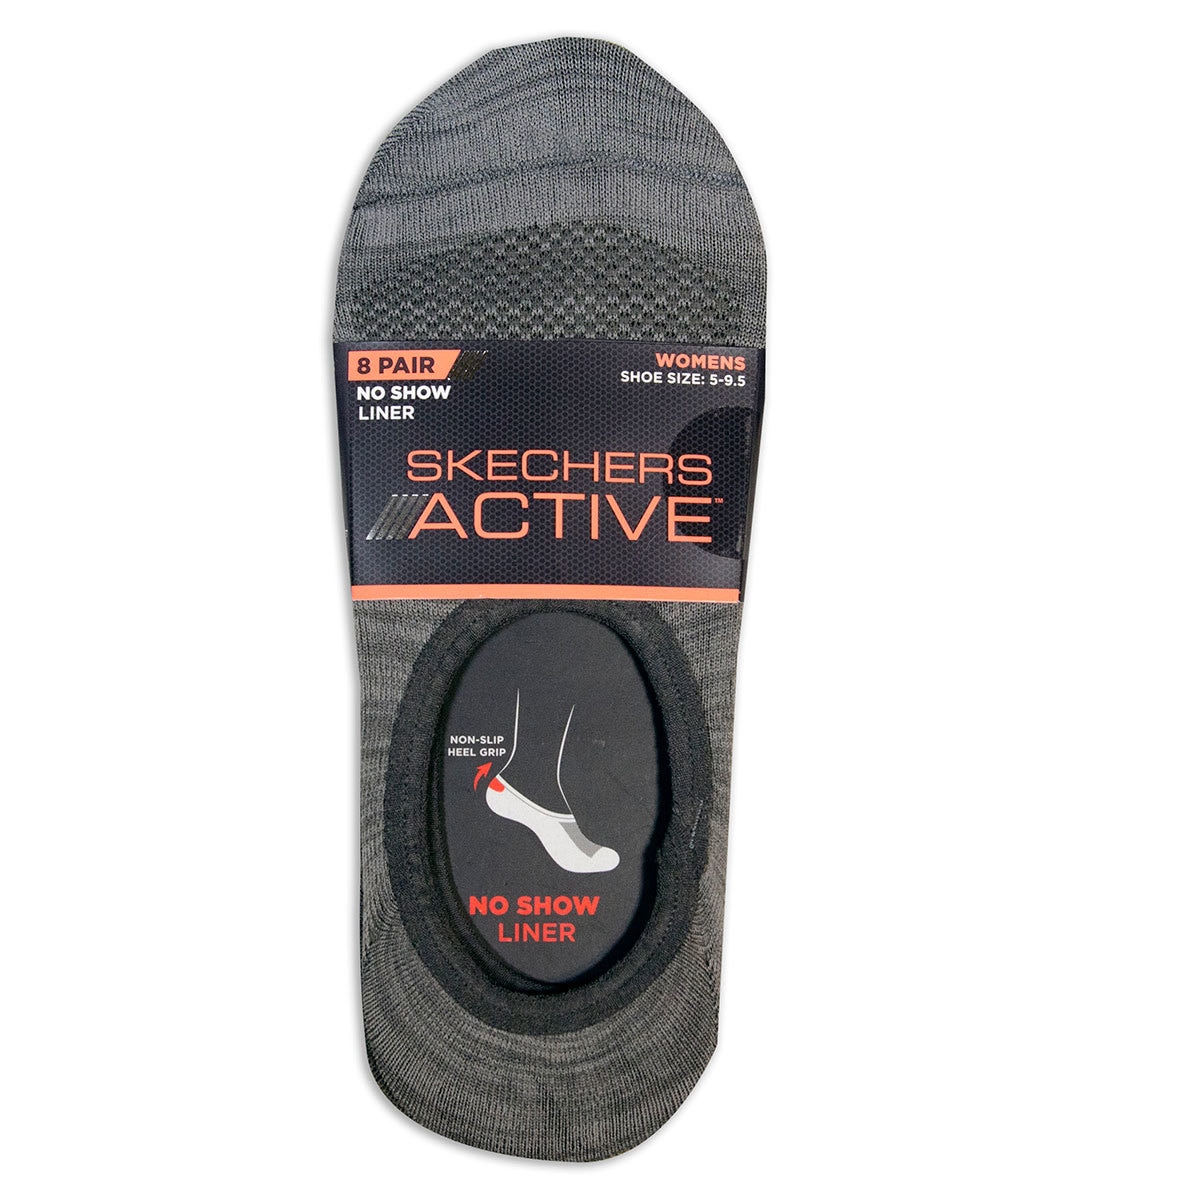 Skechers Active protectores de calzado invisible 8 pares Unitalla